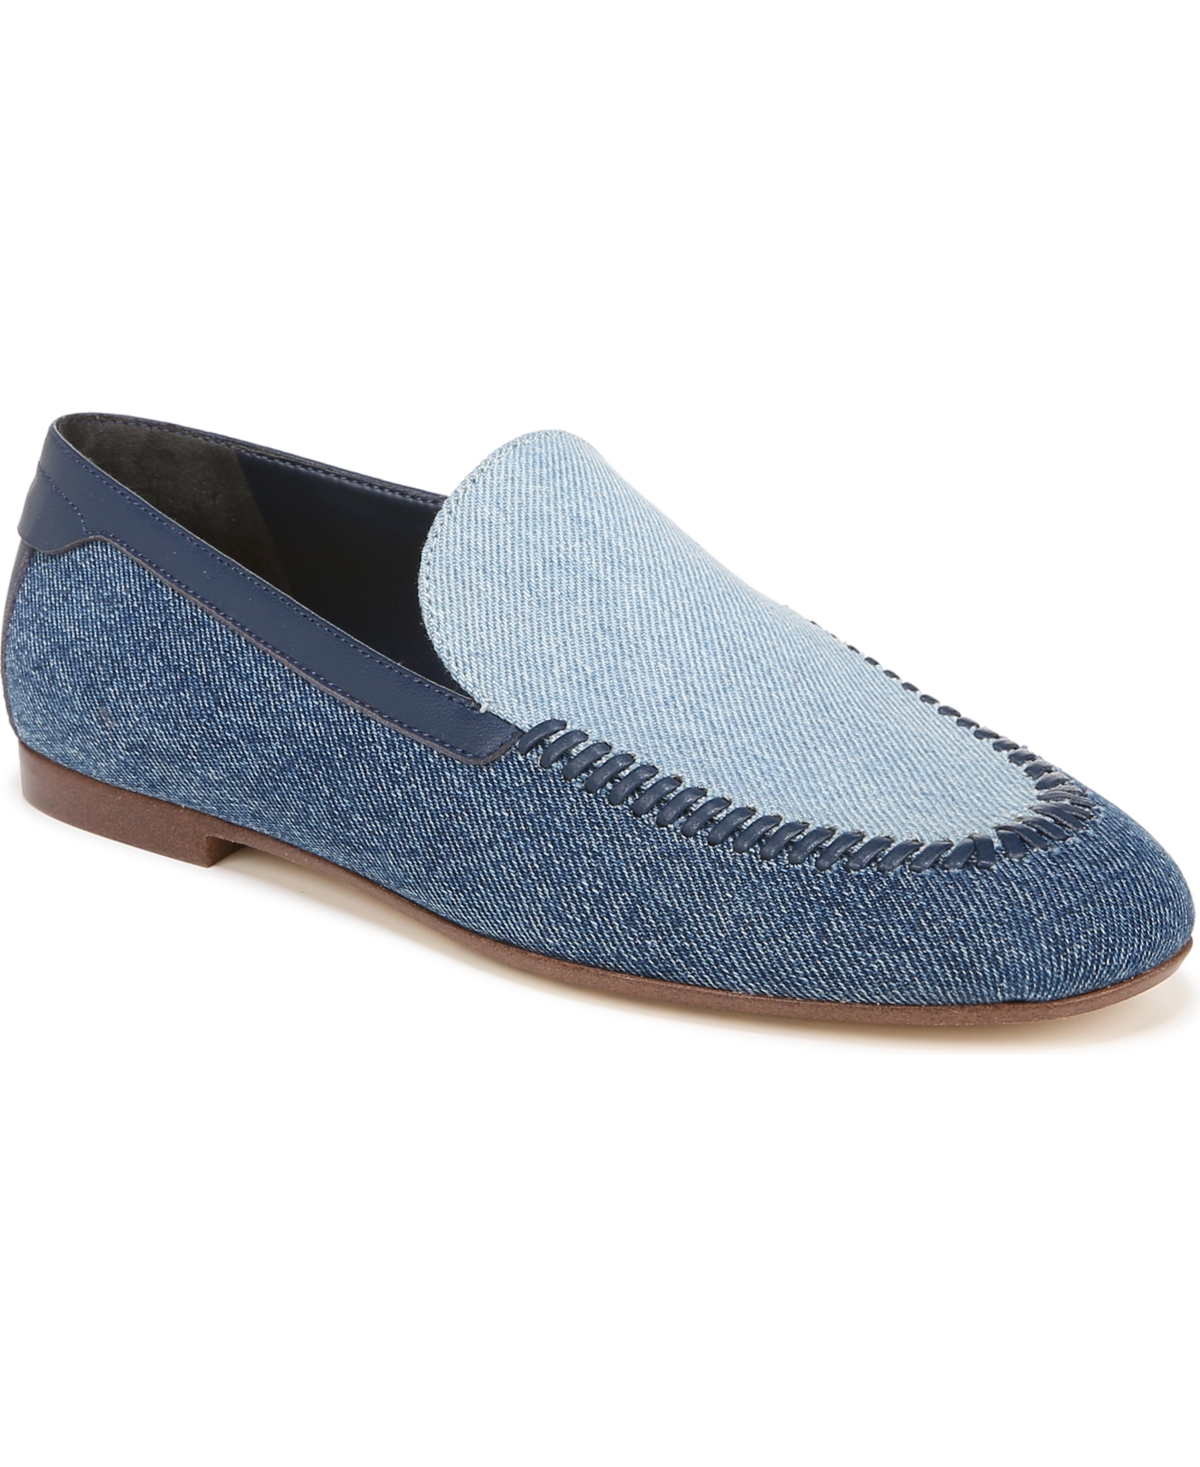 Sarto by Franco Sarto Flexa Gala Loafers - Denim Blue Fabric